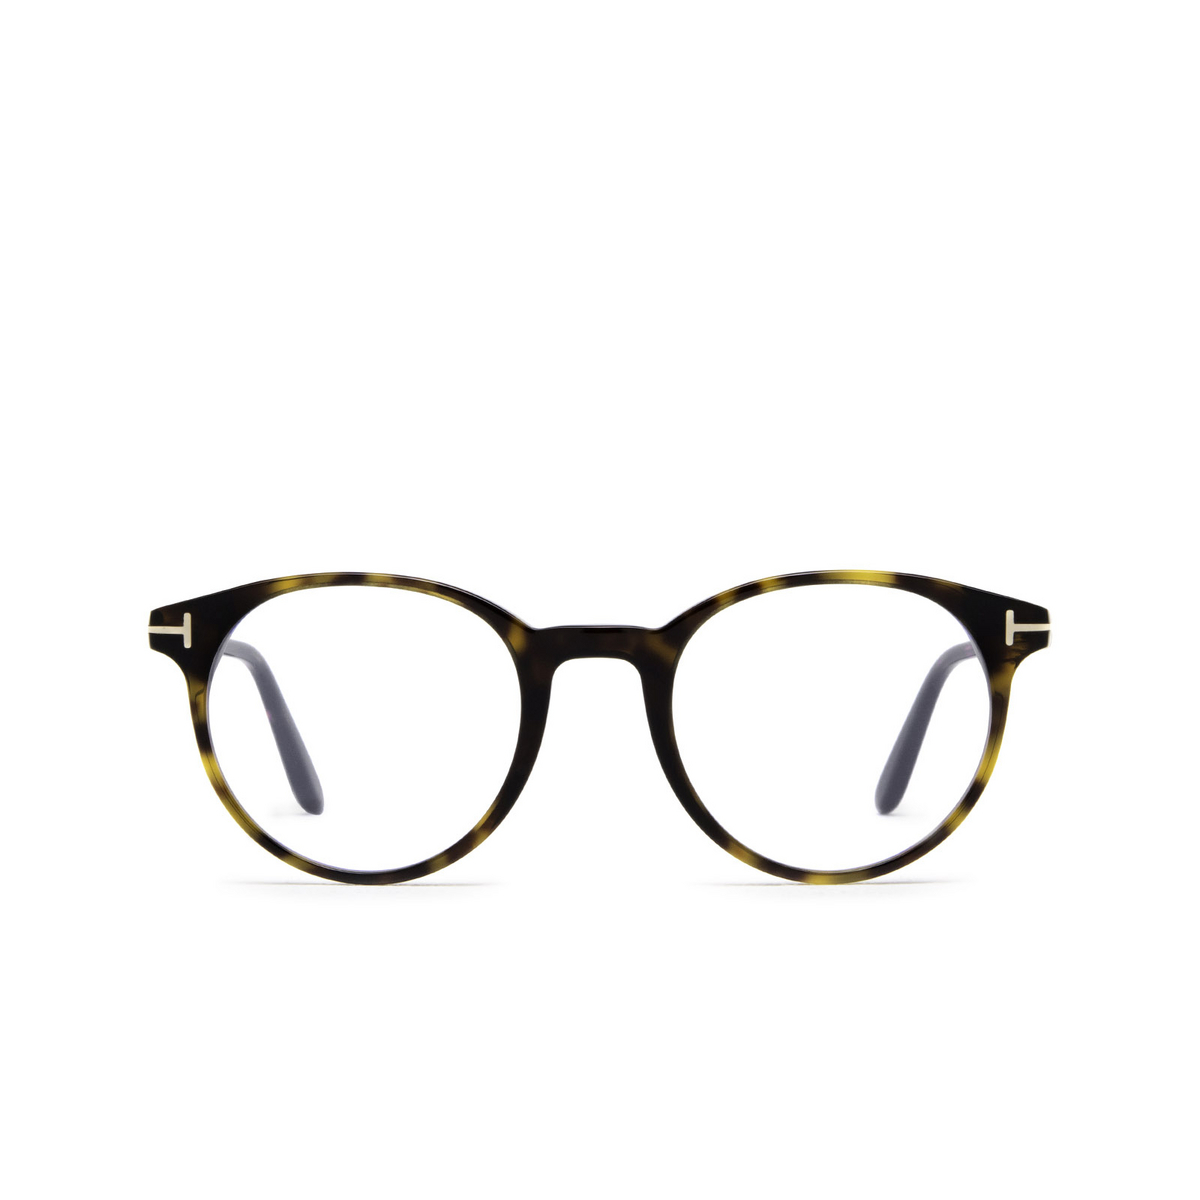 Tom Ford® Round Eyeglasses: FT5695-B color Dark Havana 052 - front view.